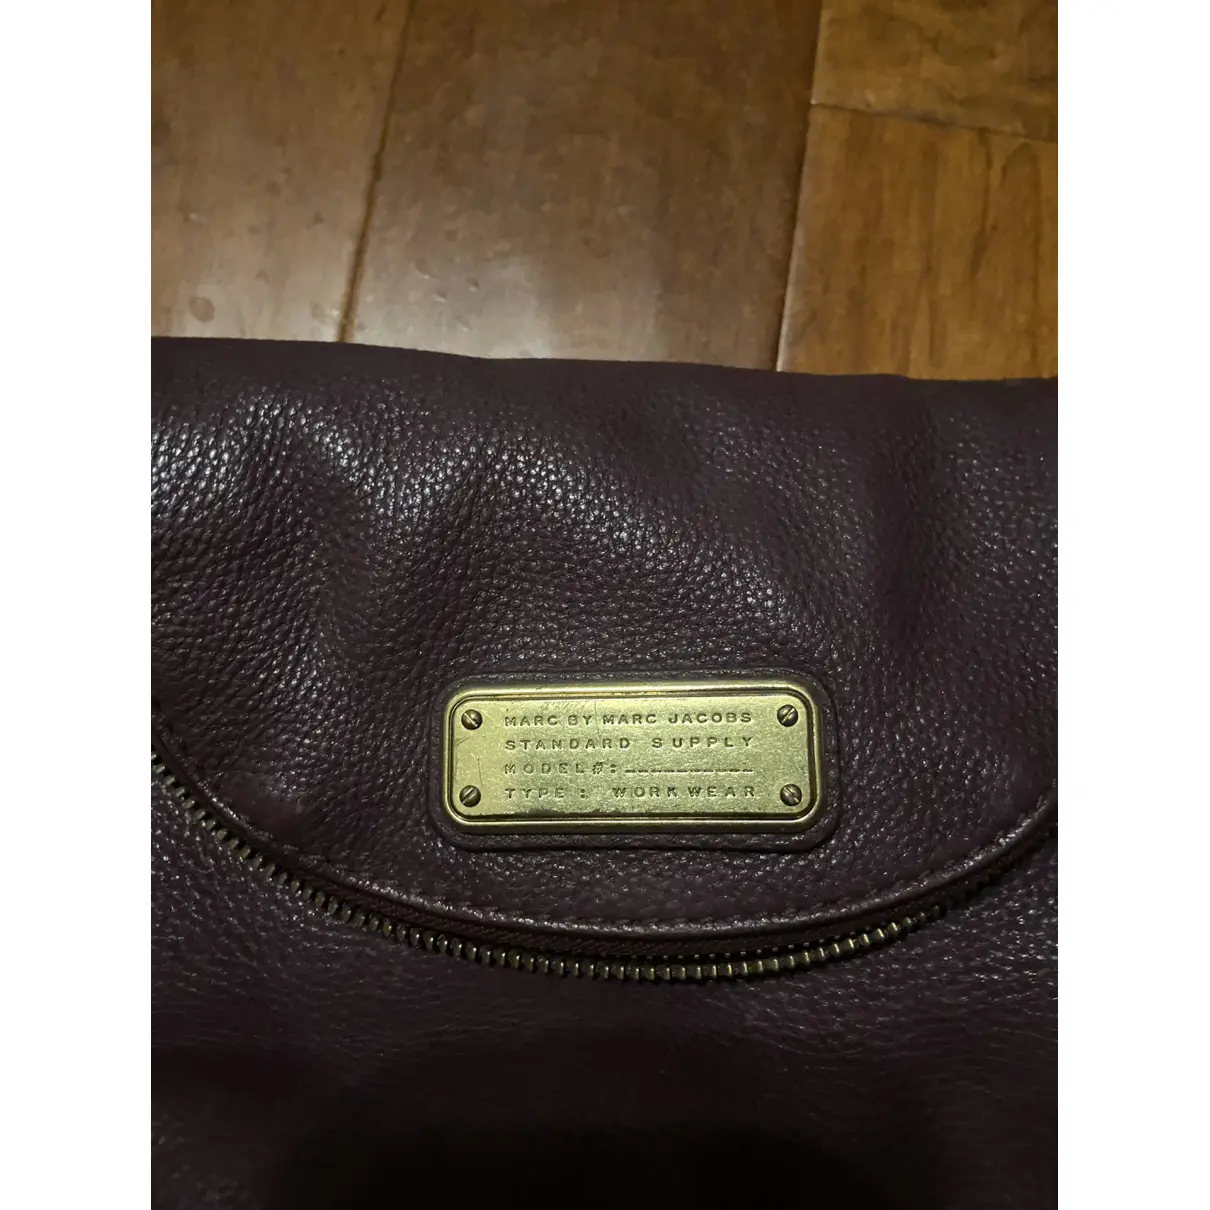 Buy Marc by Marc Jacobs Vegan leather handbag online